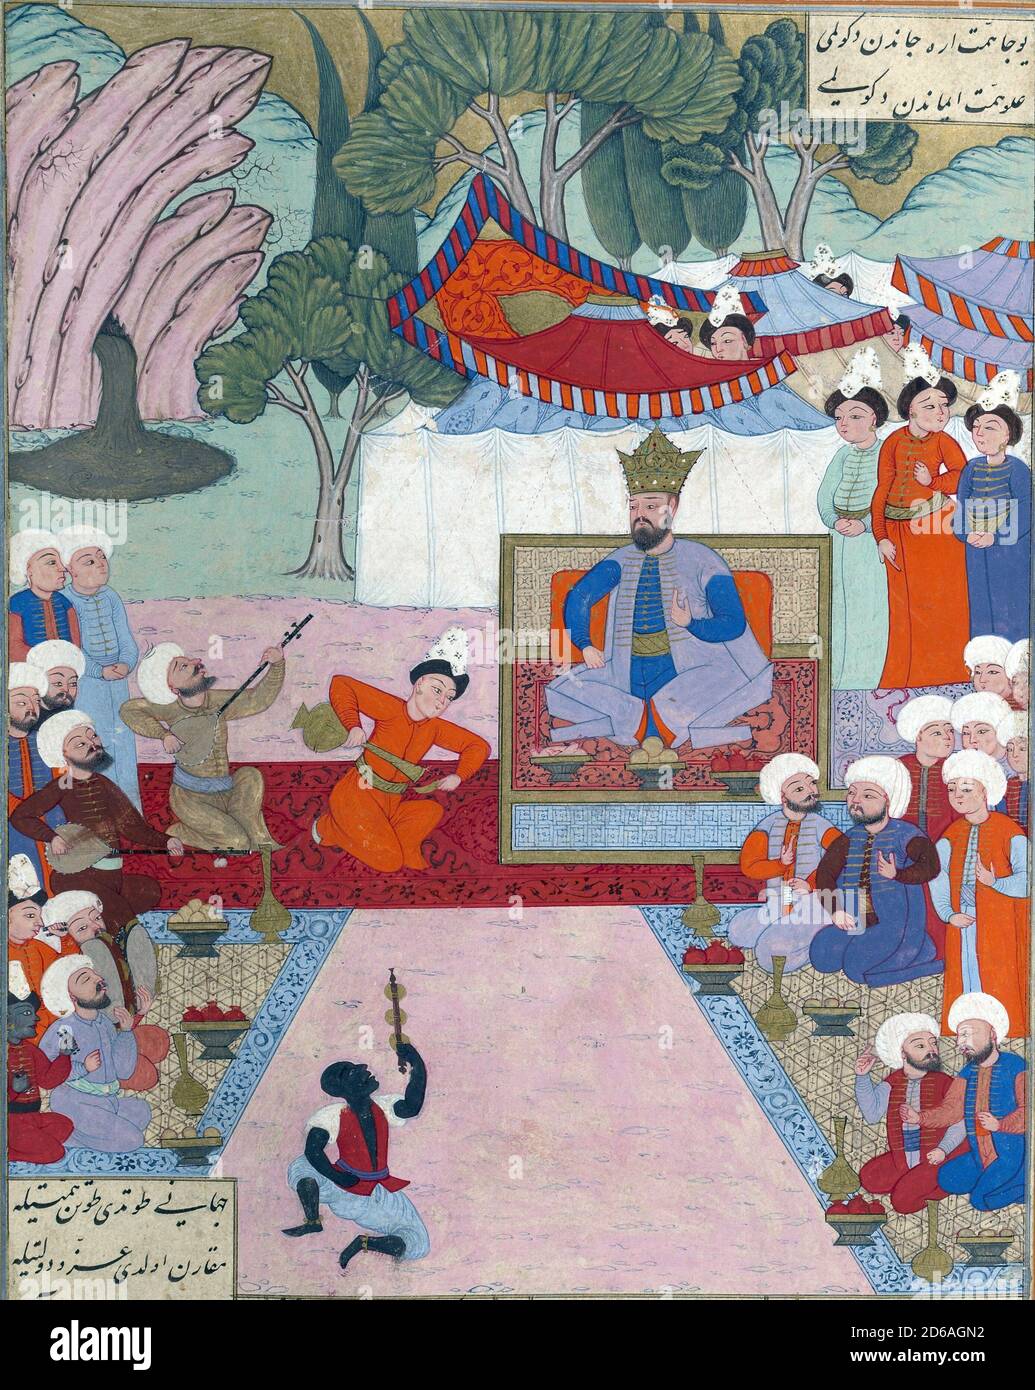 Iskandar relaxing in his camp, Persian miniature from the Shahnamah Stock Photo